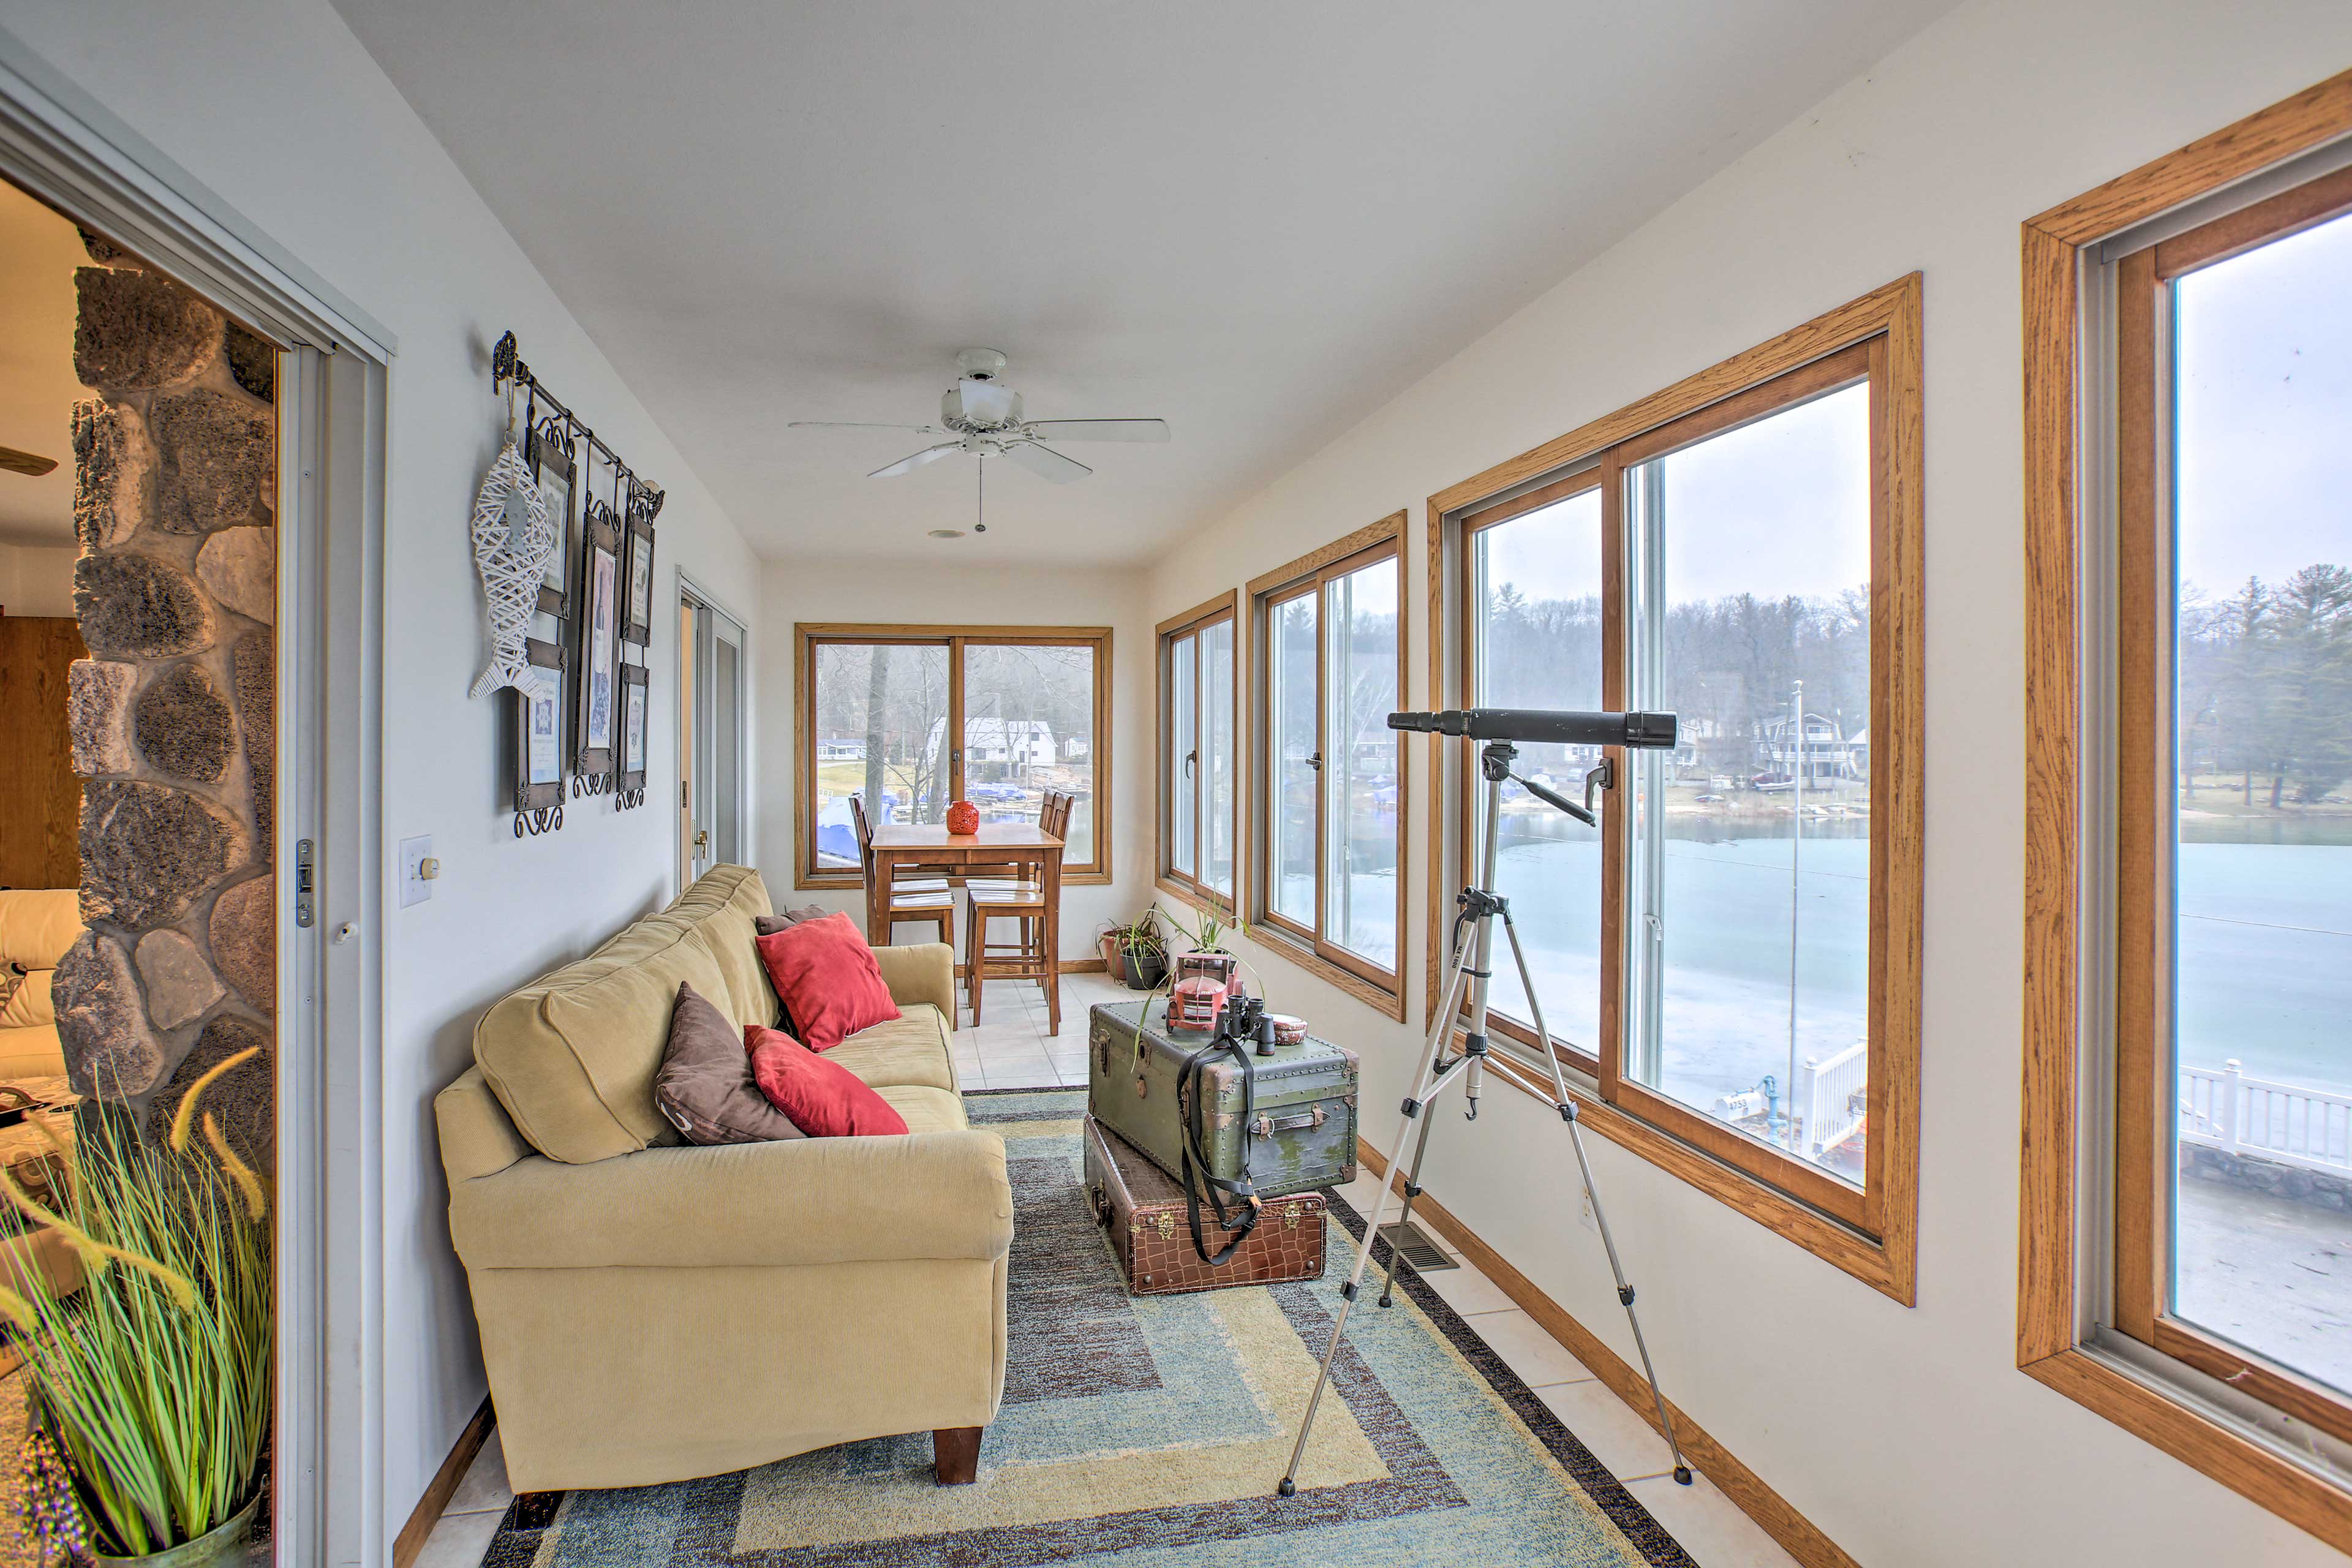 Property Image 1 - Lakefront Newaygo Home - Private Dock, Kayaks